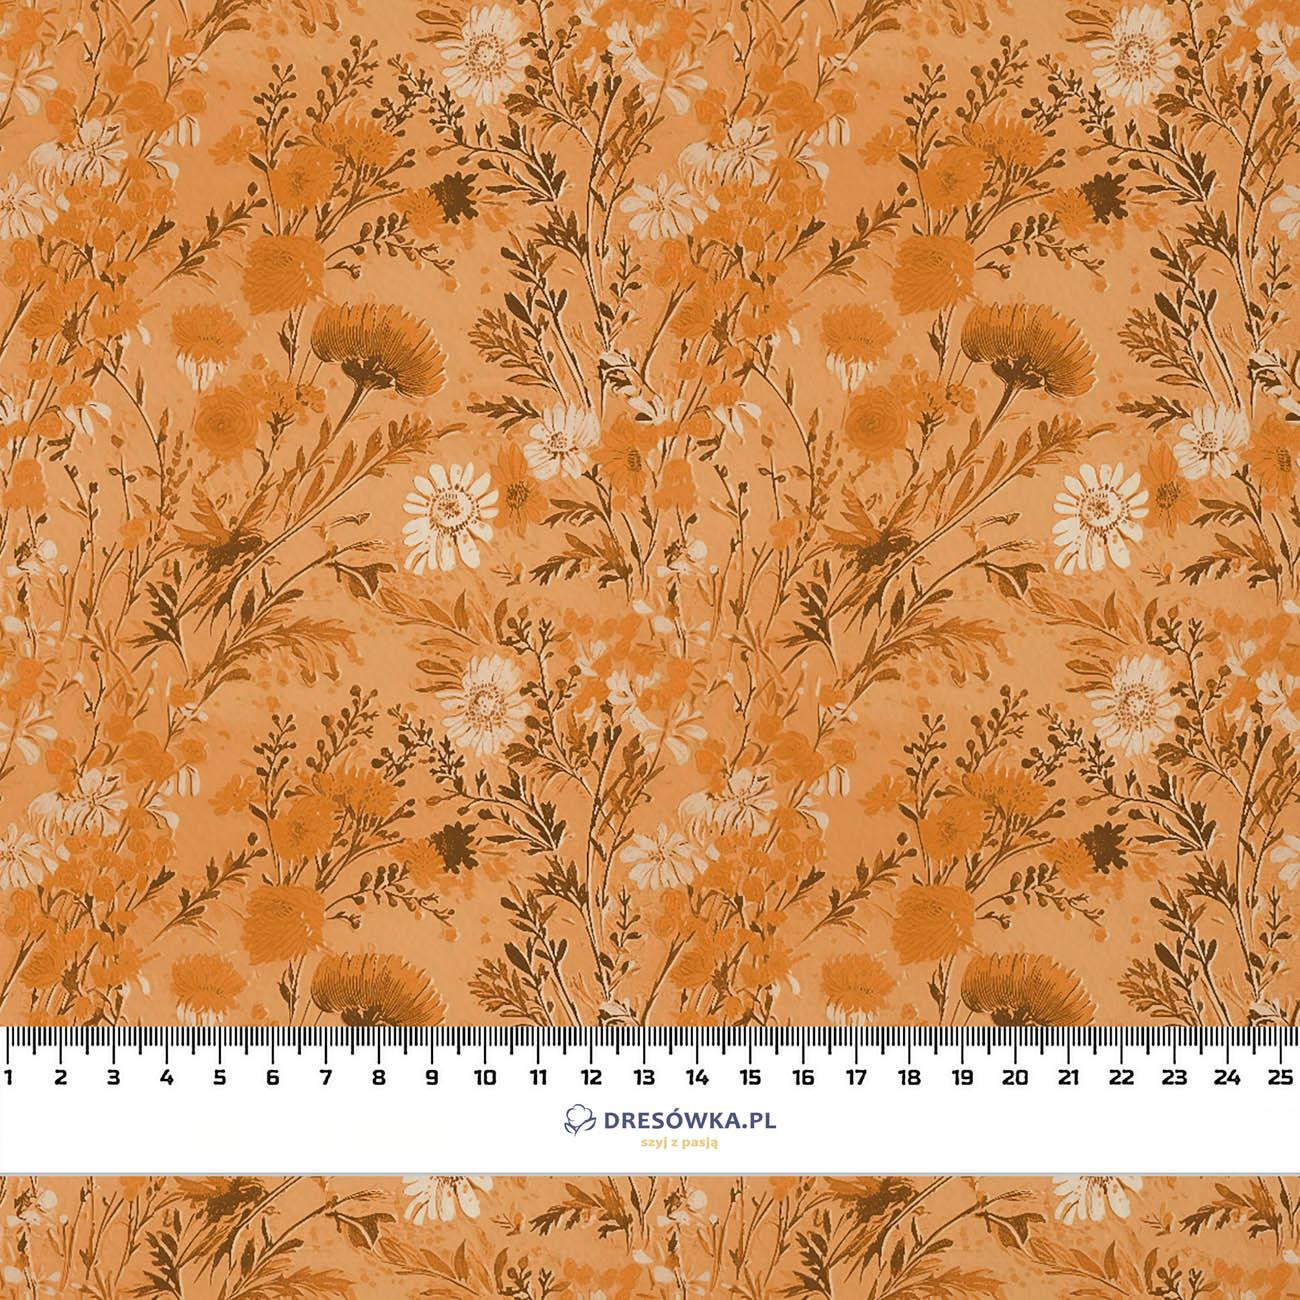 SUNDIAL ORANGE / FLOWERS - Waterproof woven fabric